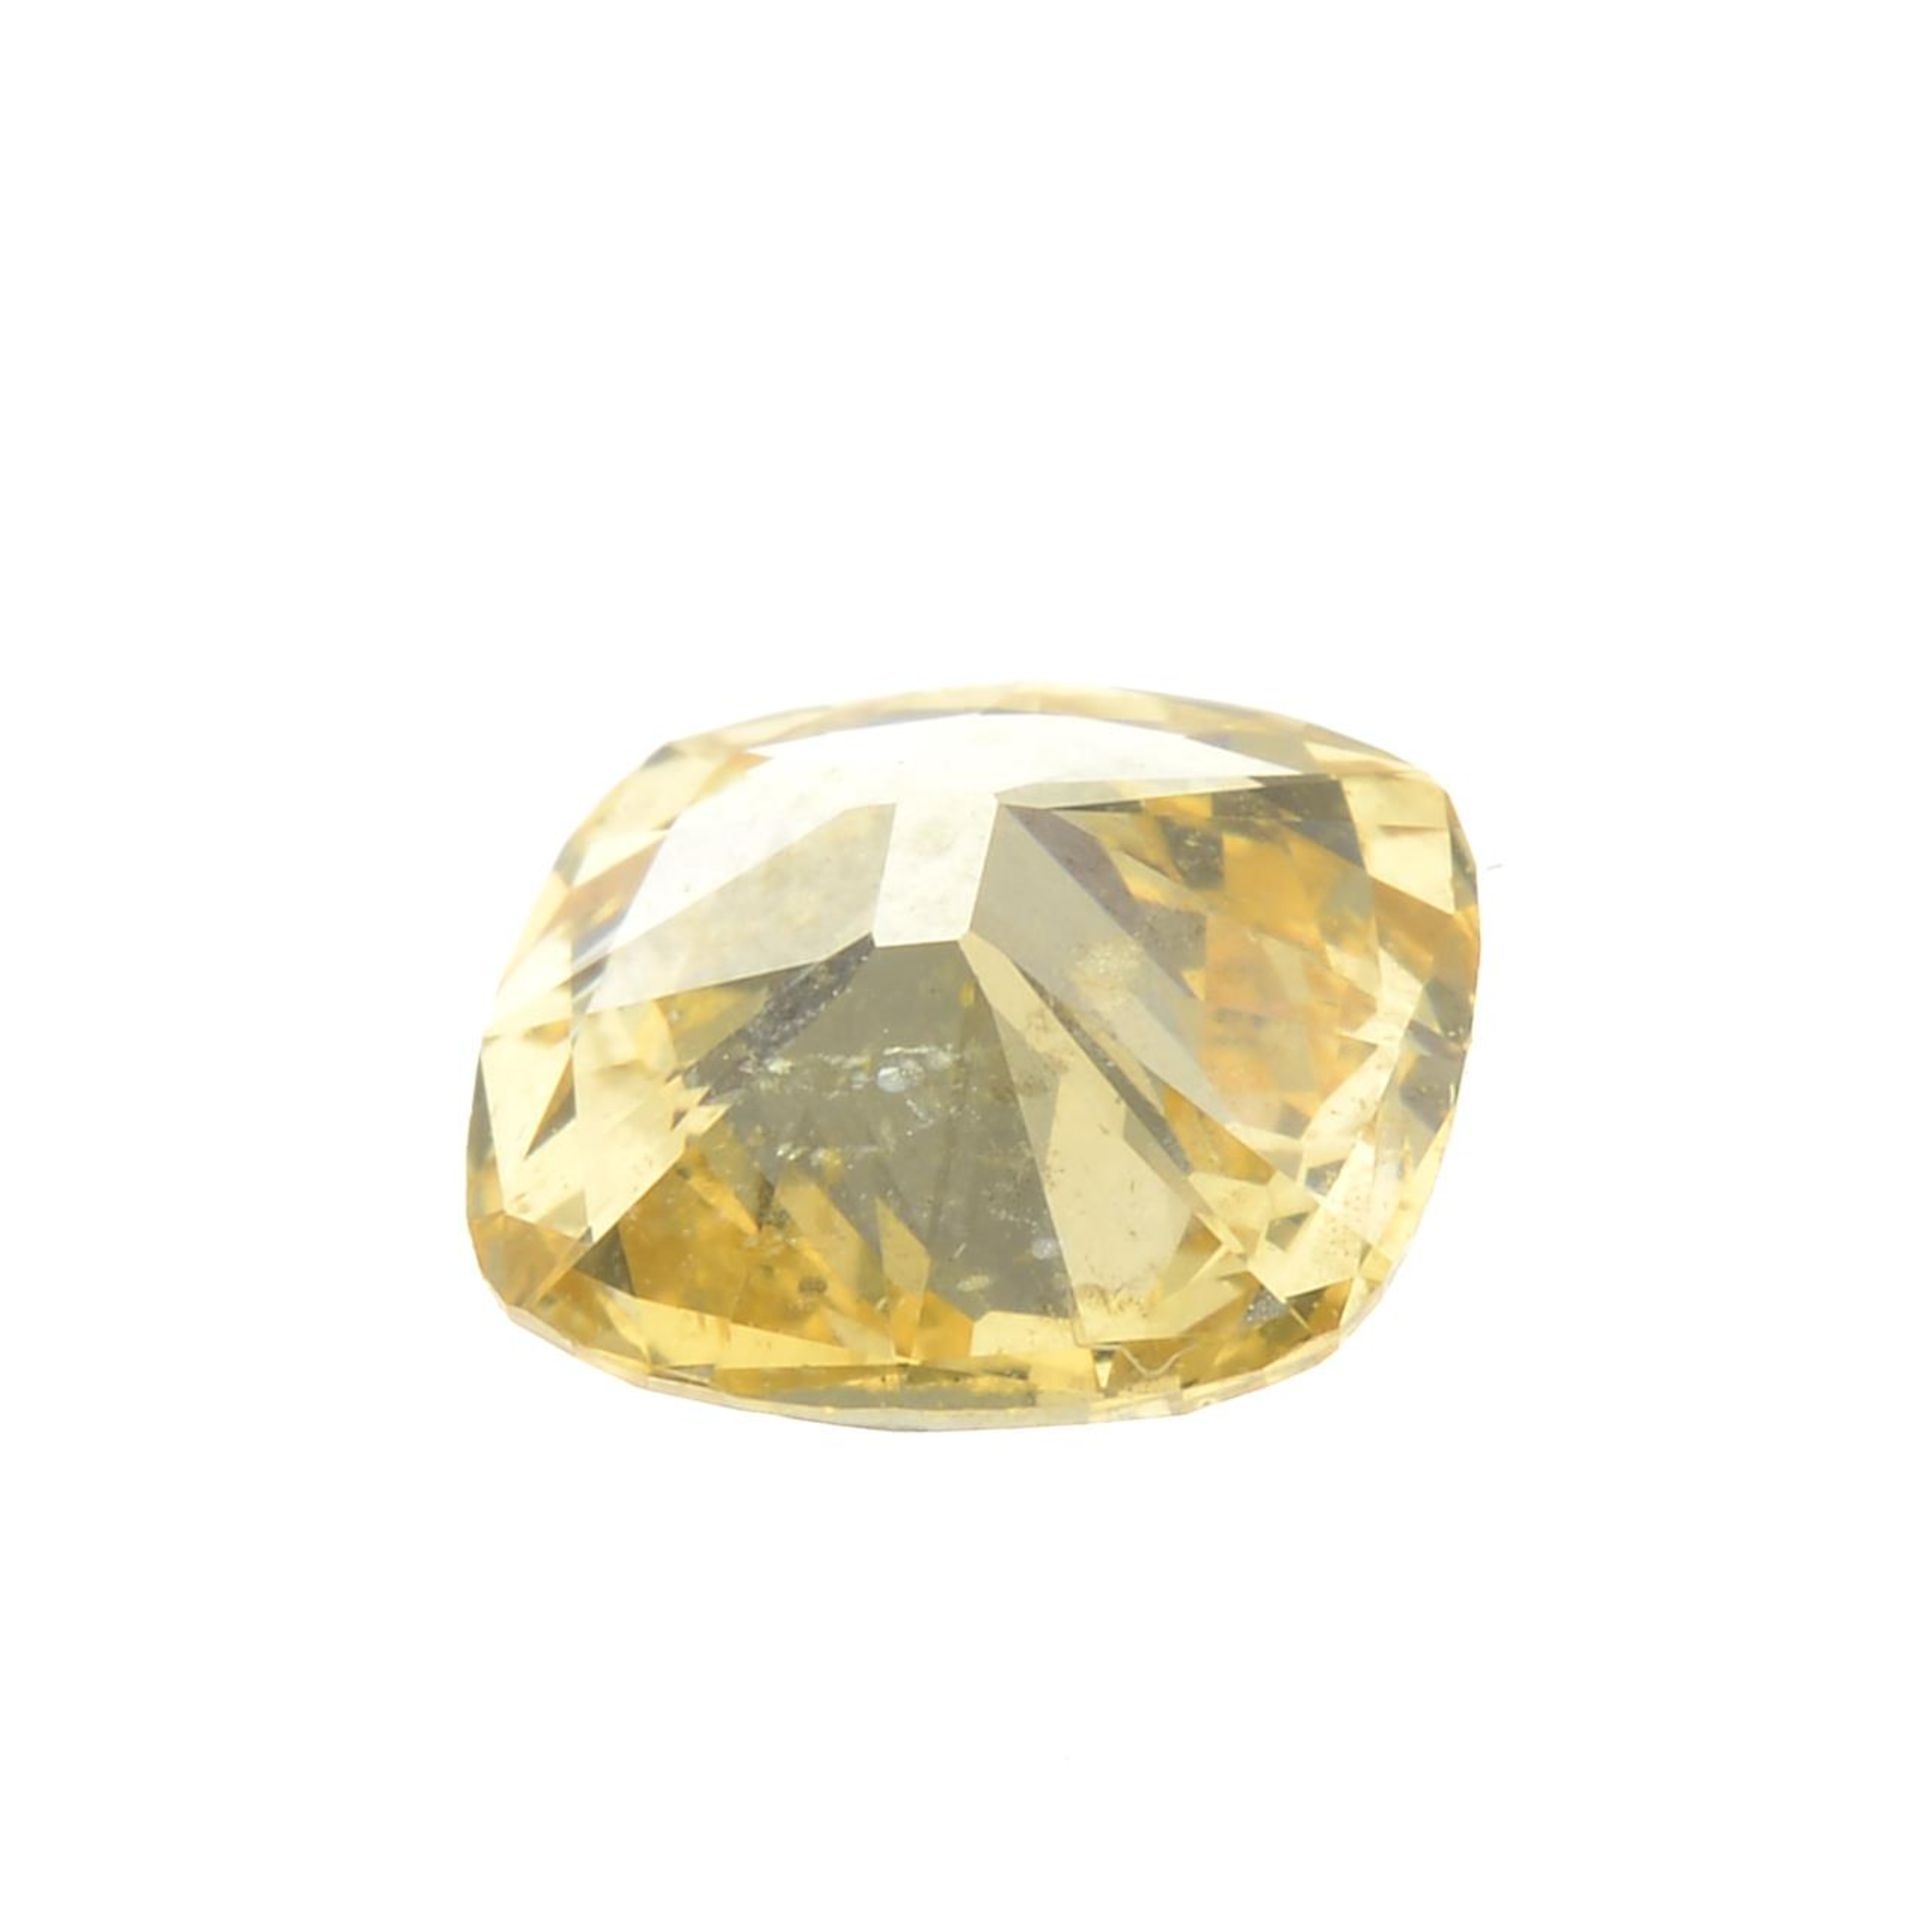 A cushion-shape fancy intense orange-yellow diamond. - Image 2 of 3